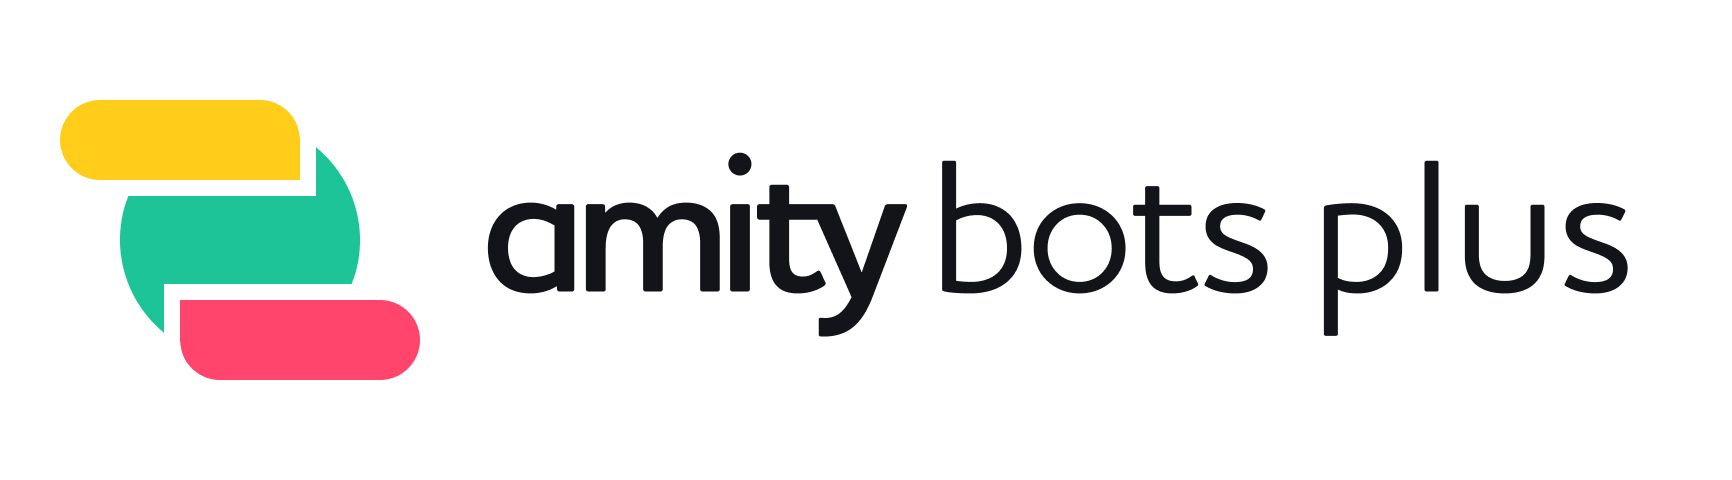 Amity - amity bots plus logo horizontal - ภาพที่ 1